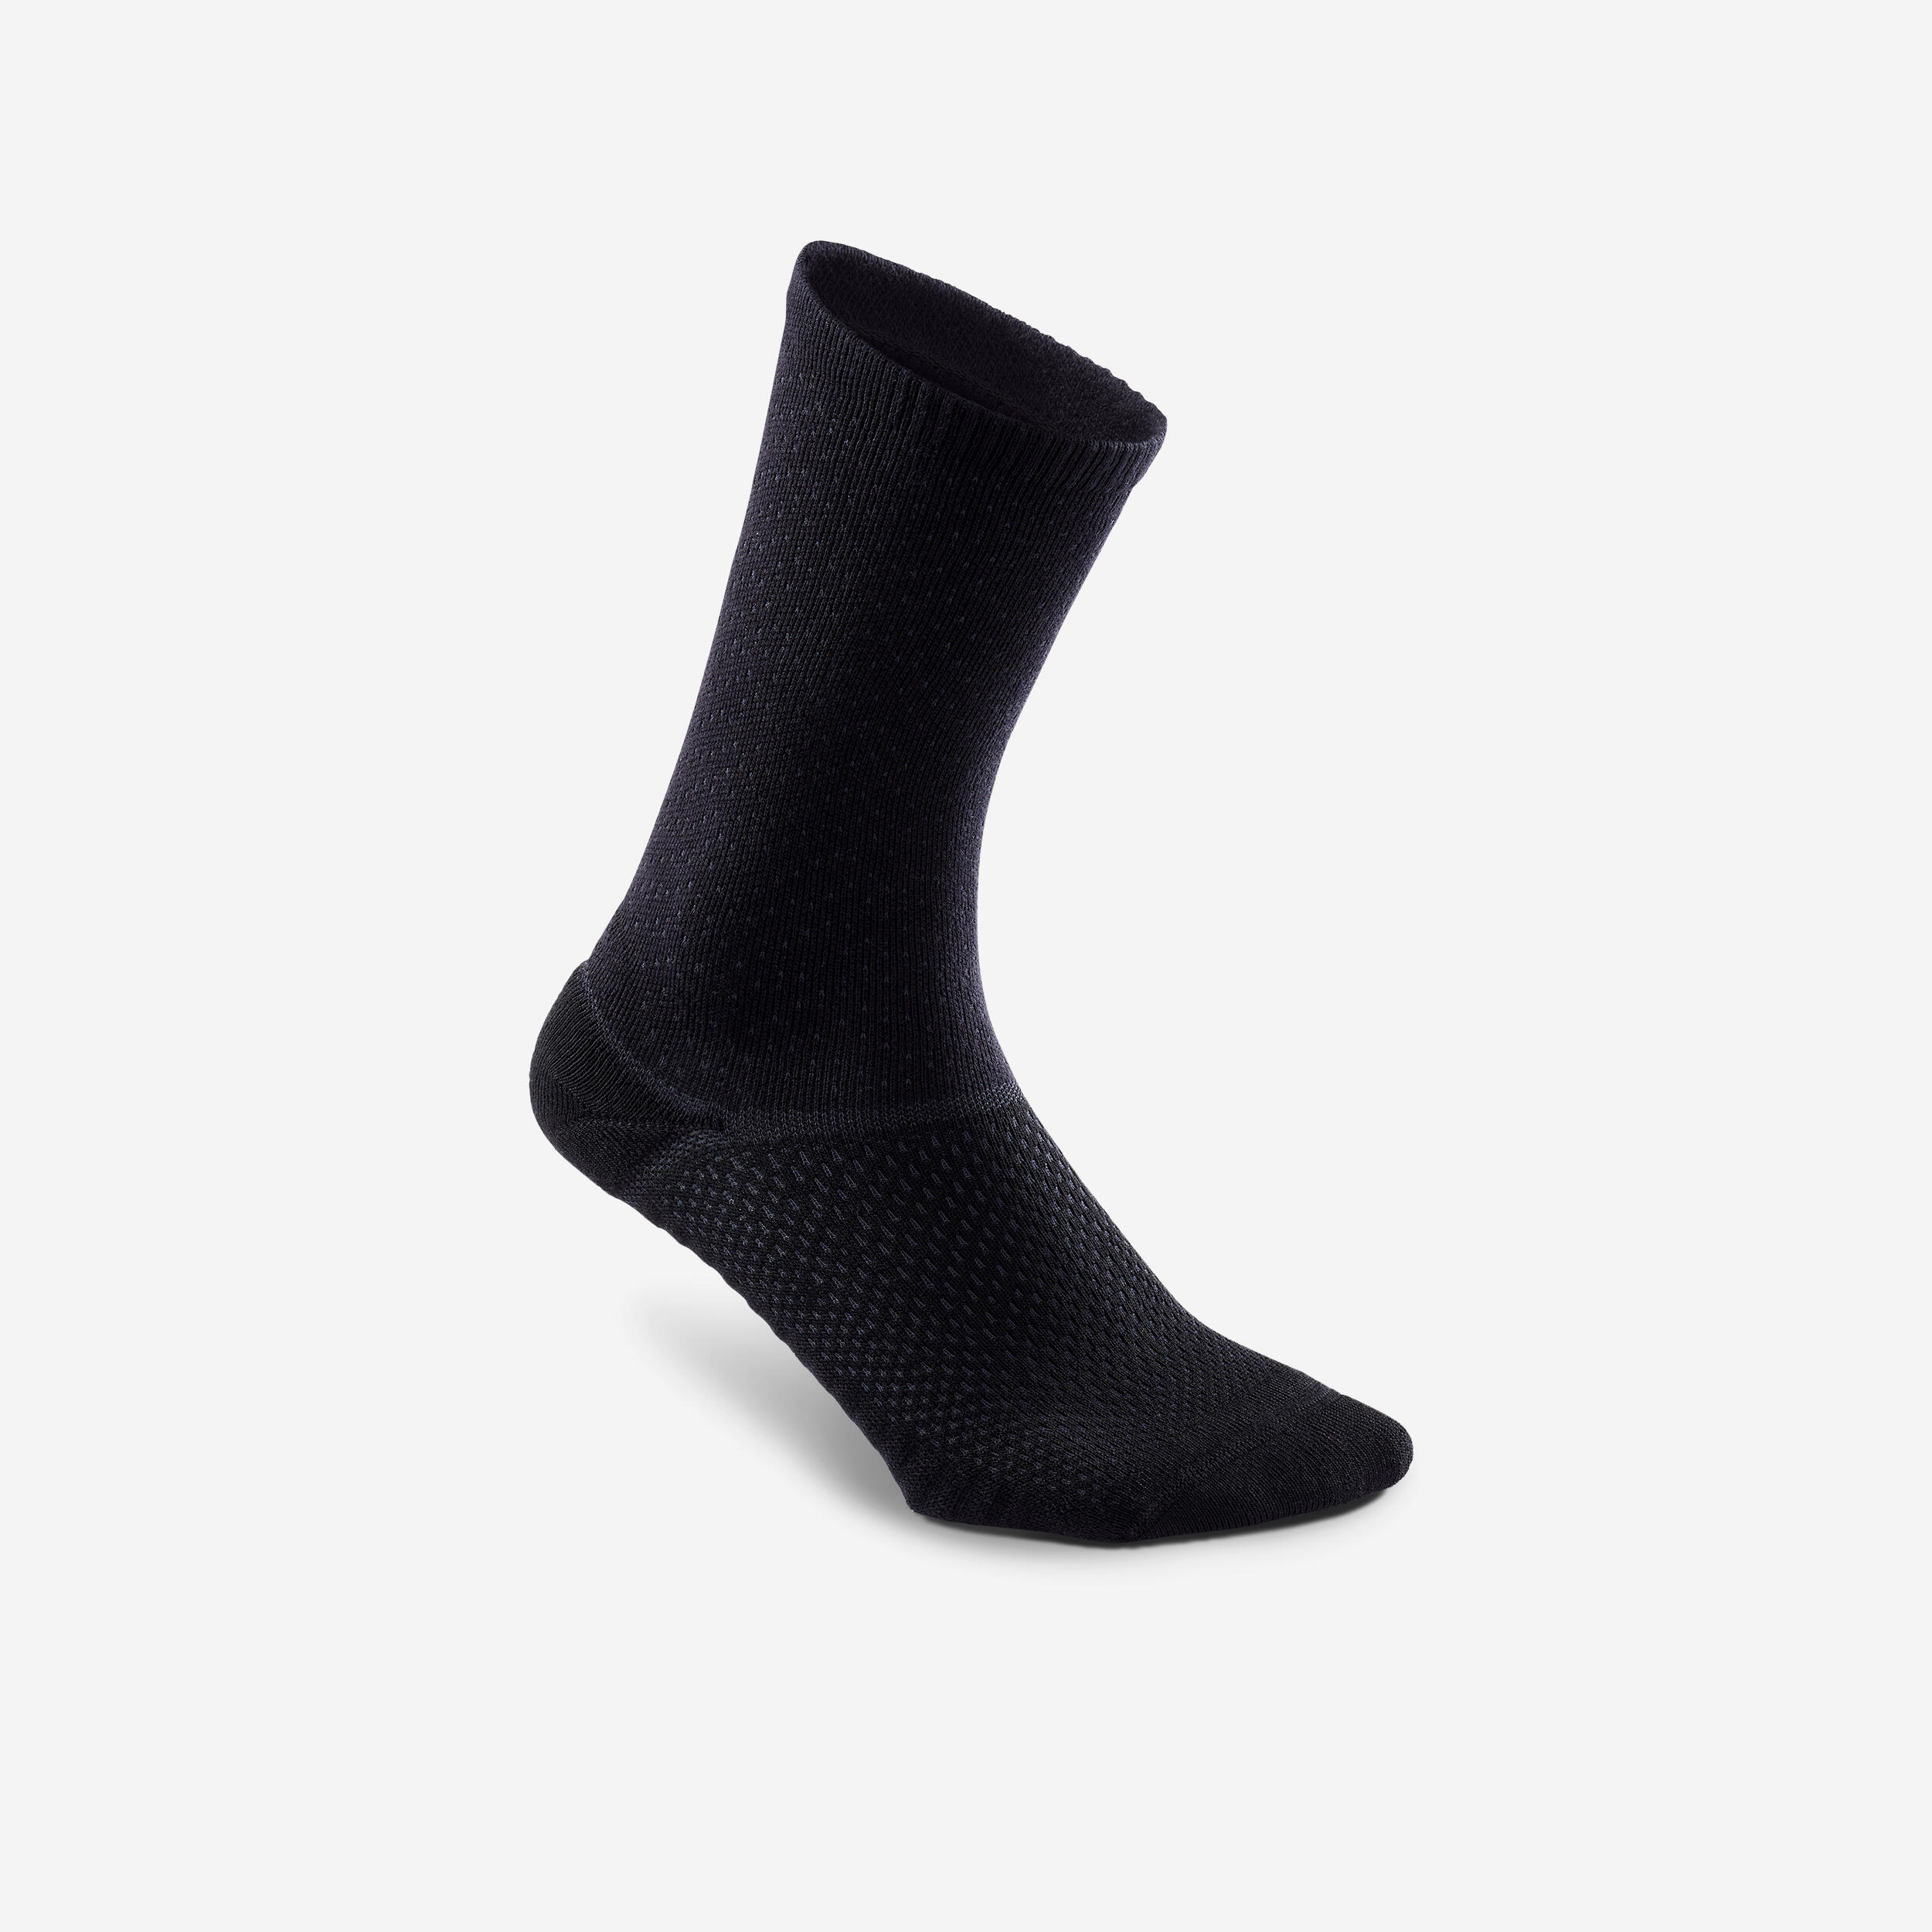 High socks - 2-Pair pack - Black 1/3